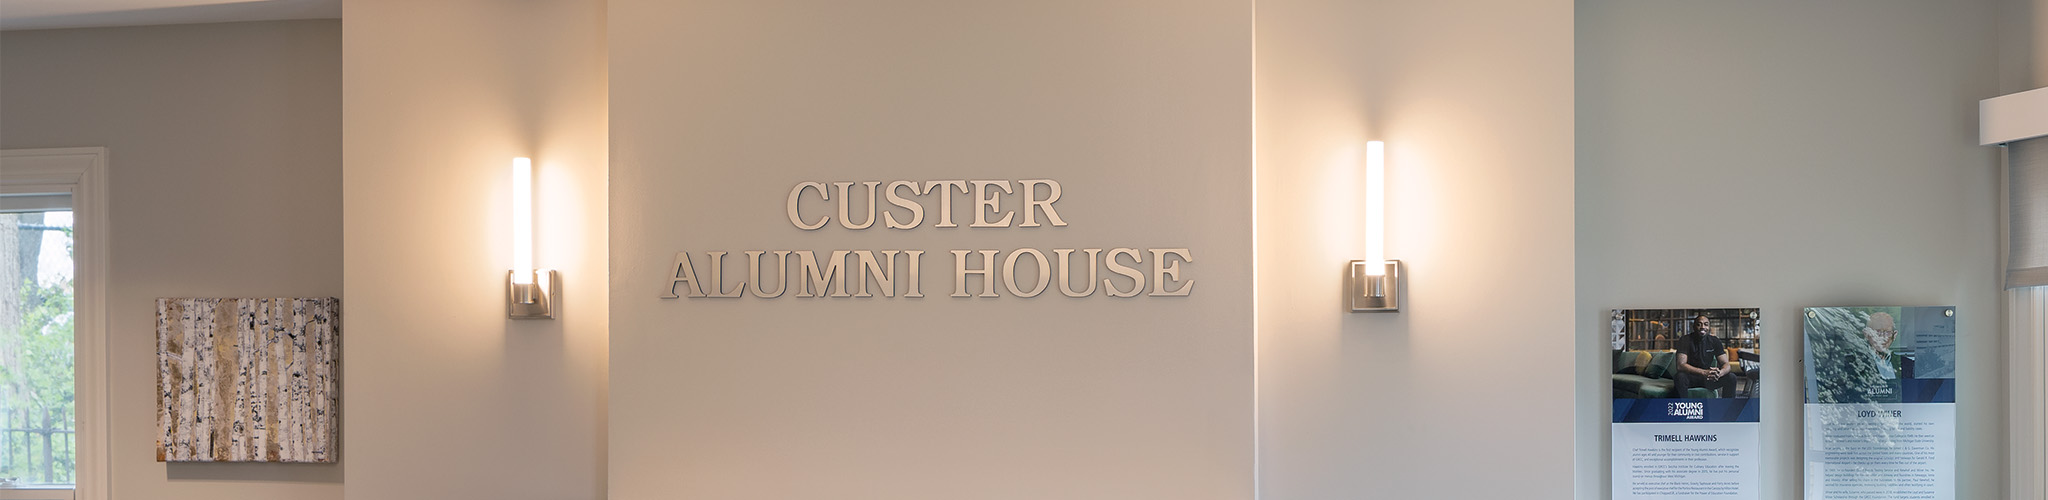 Custer Banner